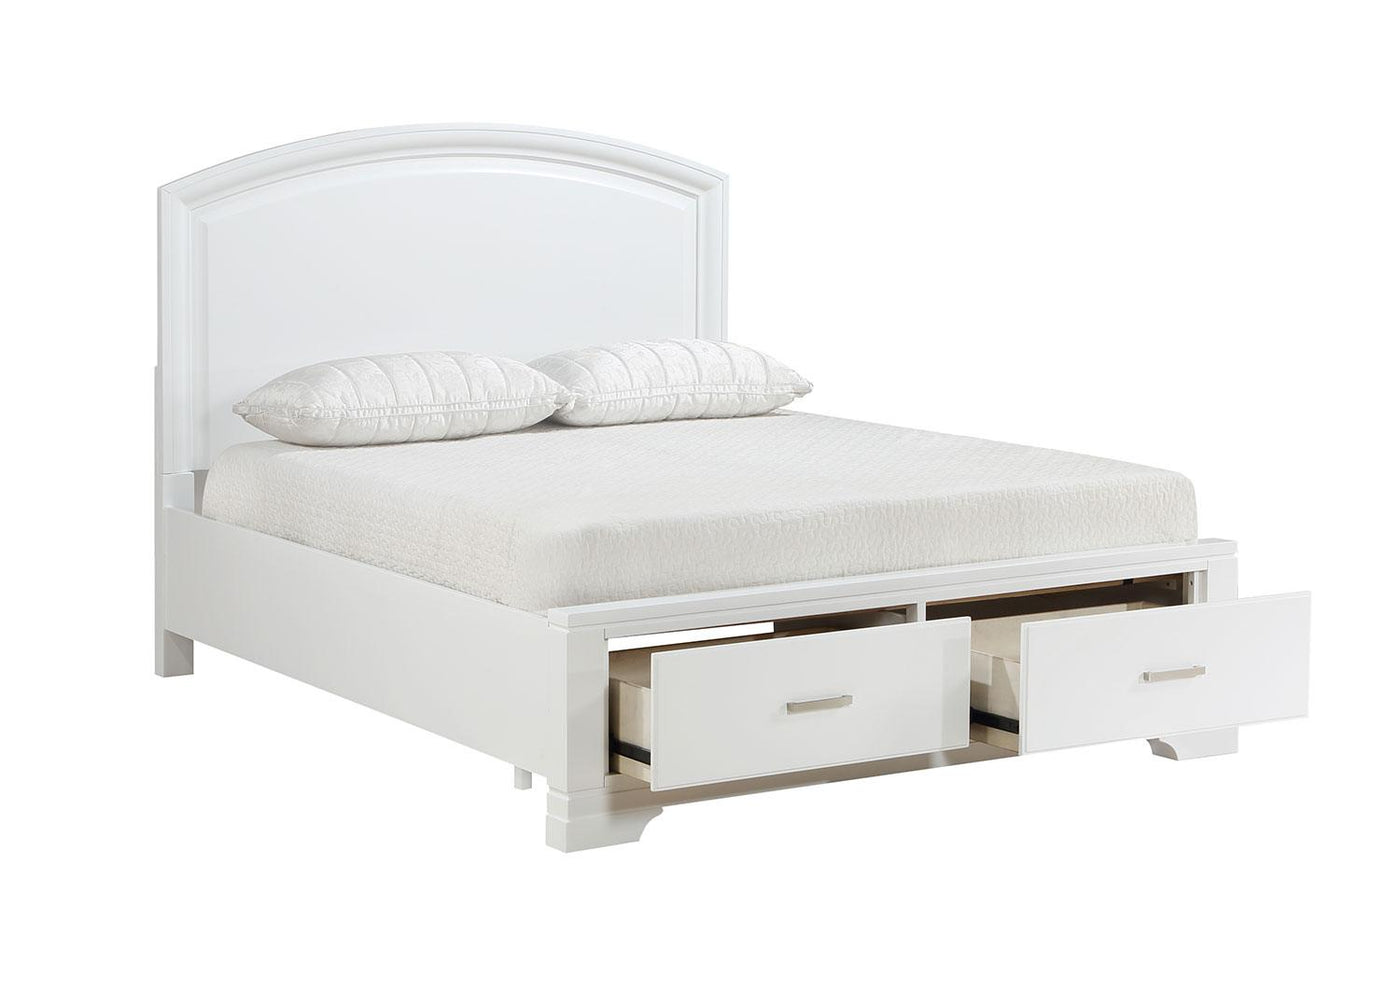 Arista 5-Piece Full Storage Bedroom Package - White